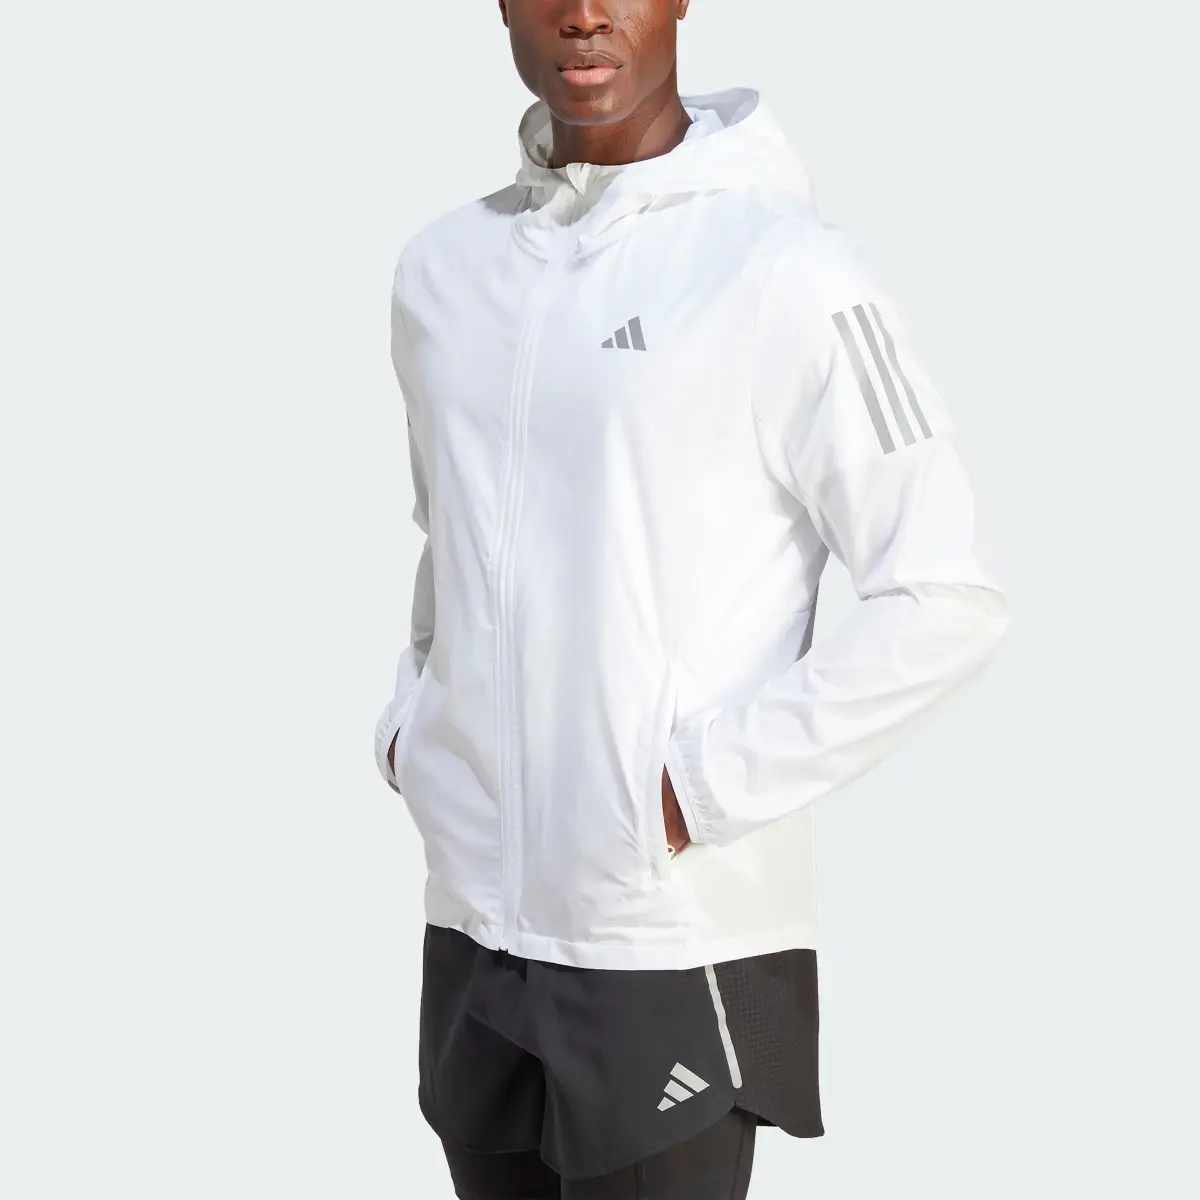 Adidas Own the Run Jacket. 1